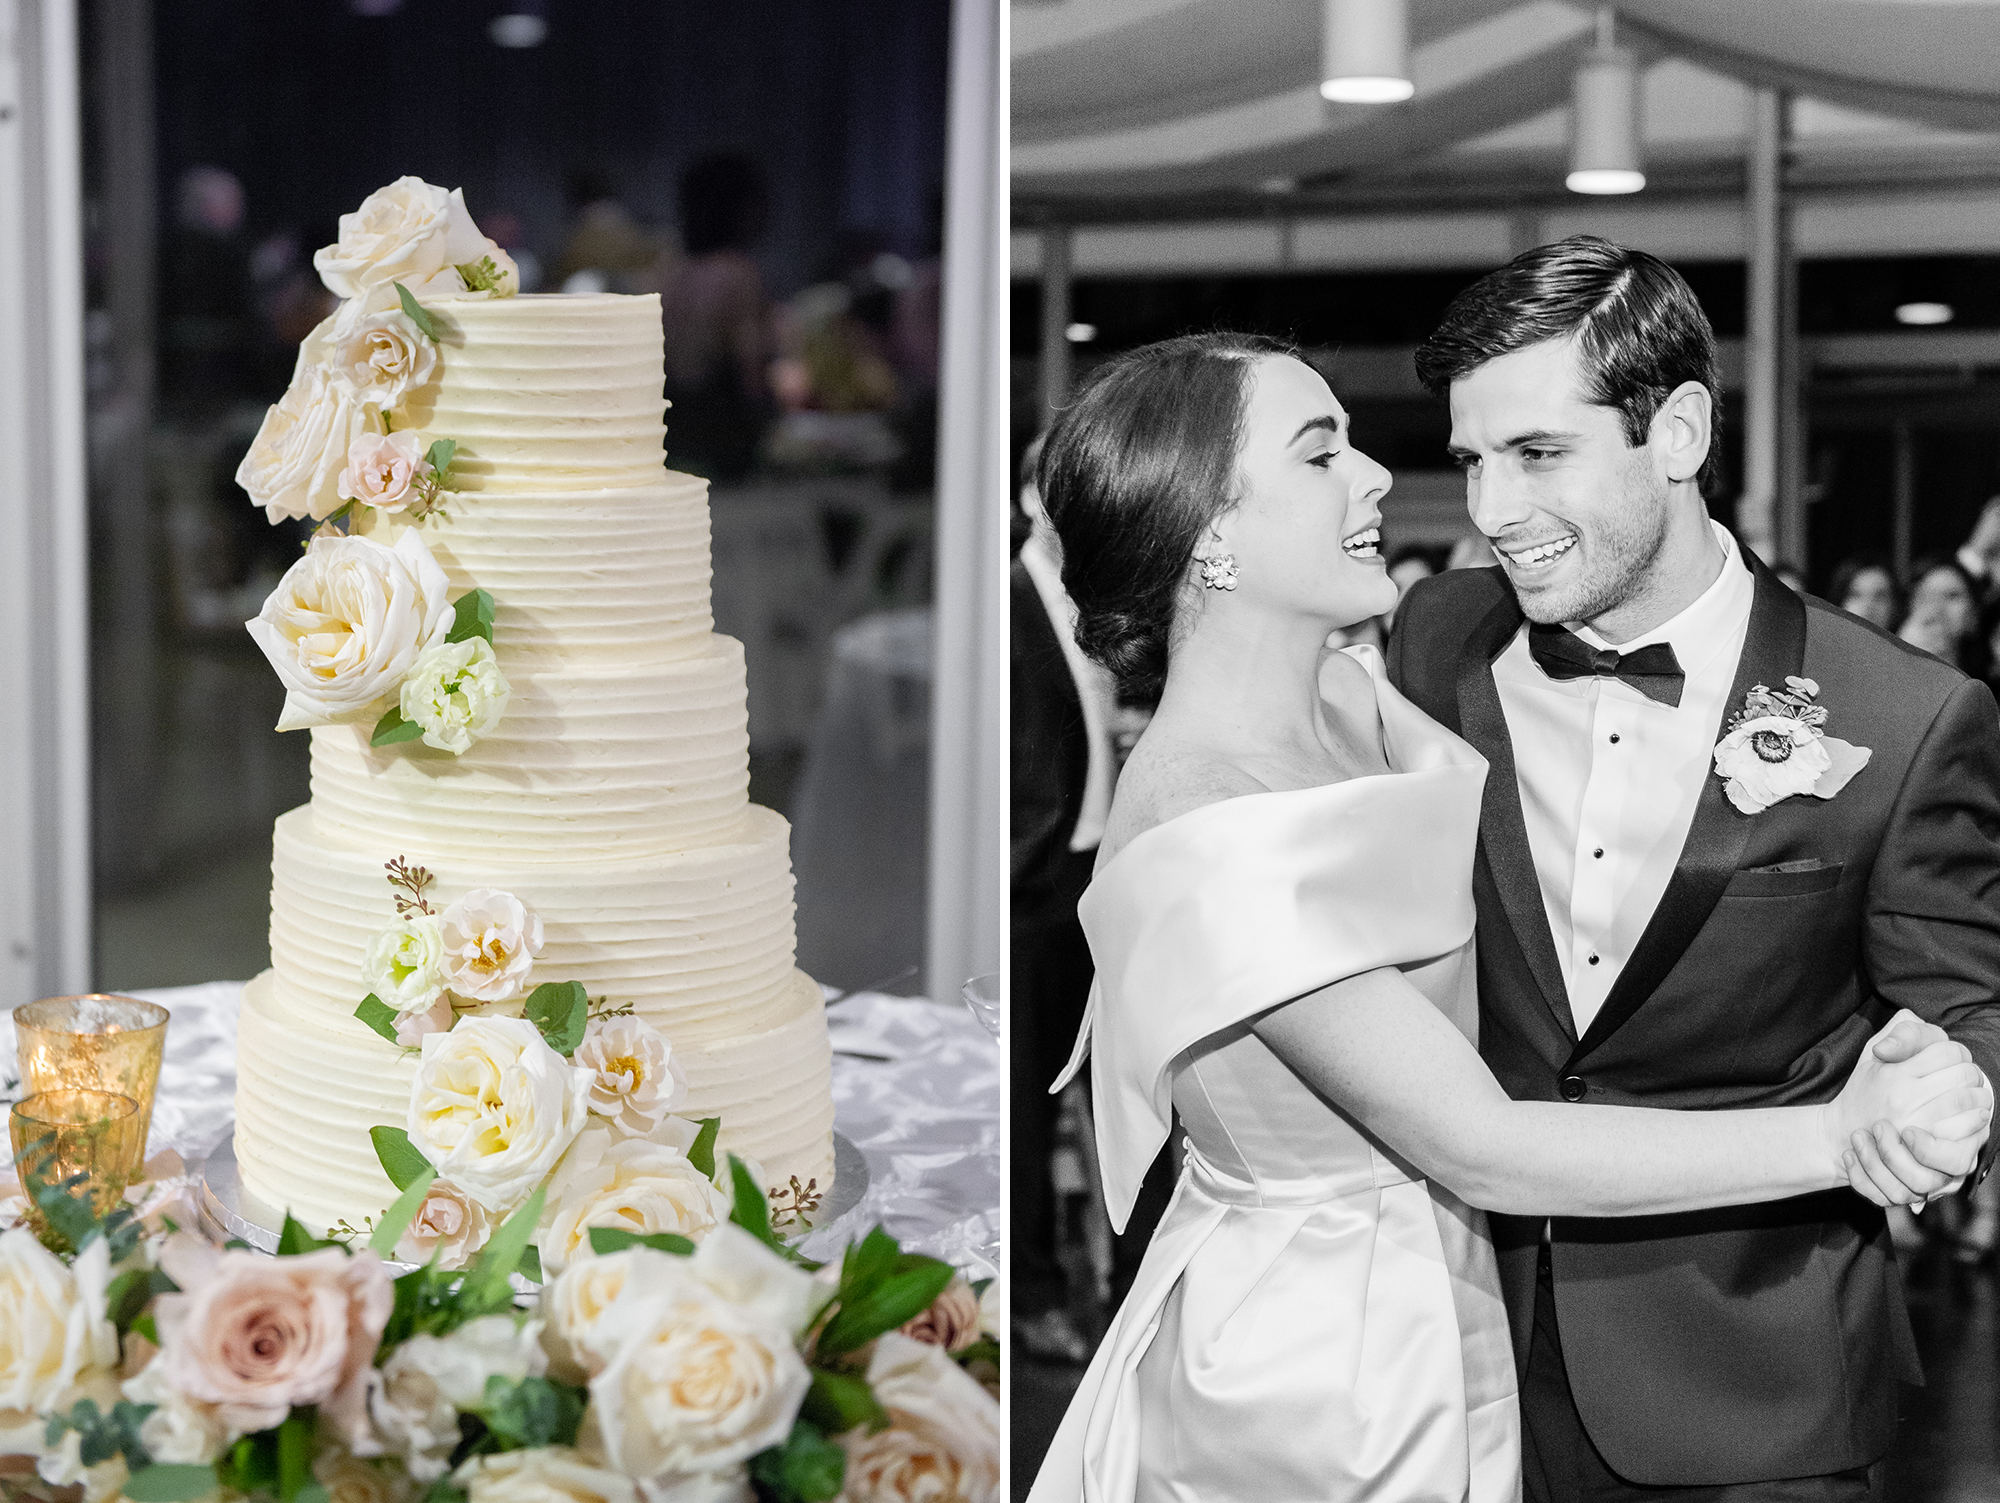 Wedding cake; bride and groom dancing